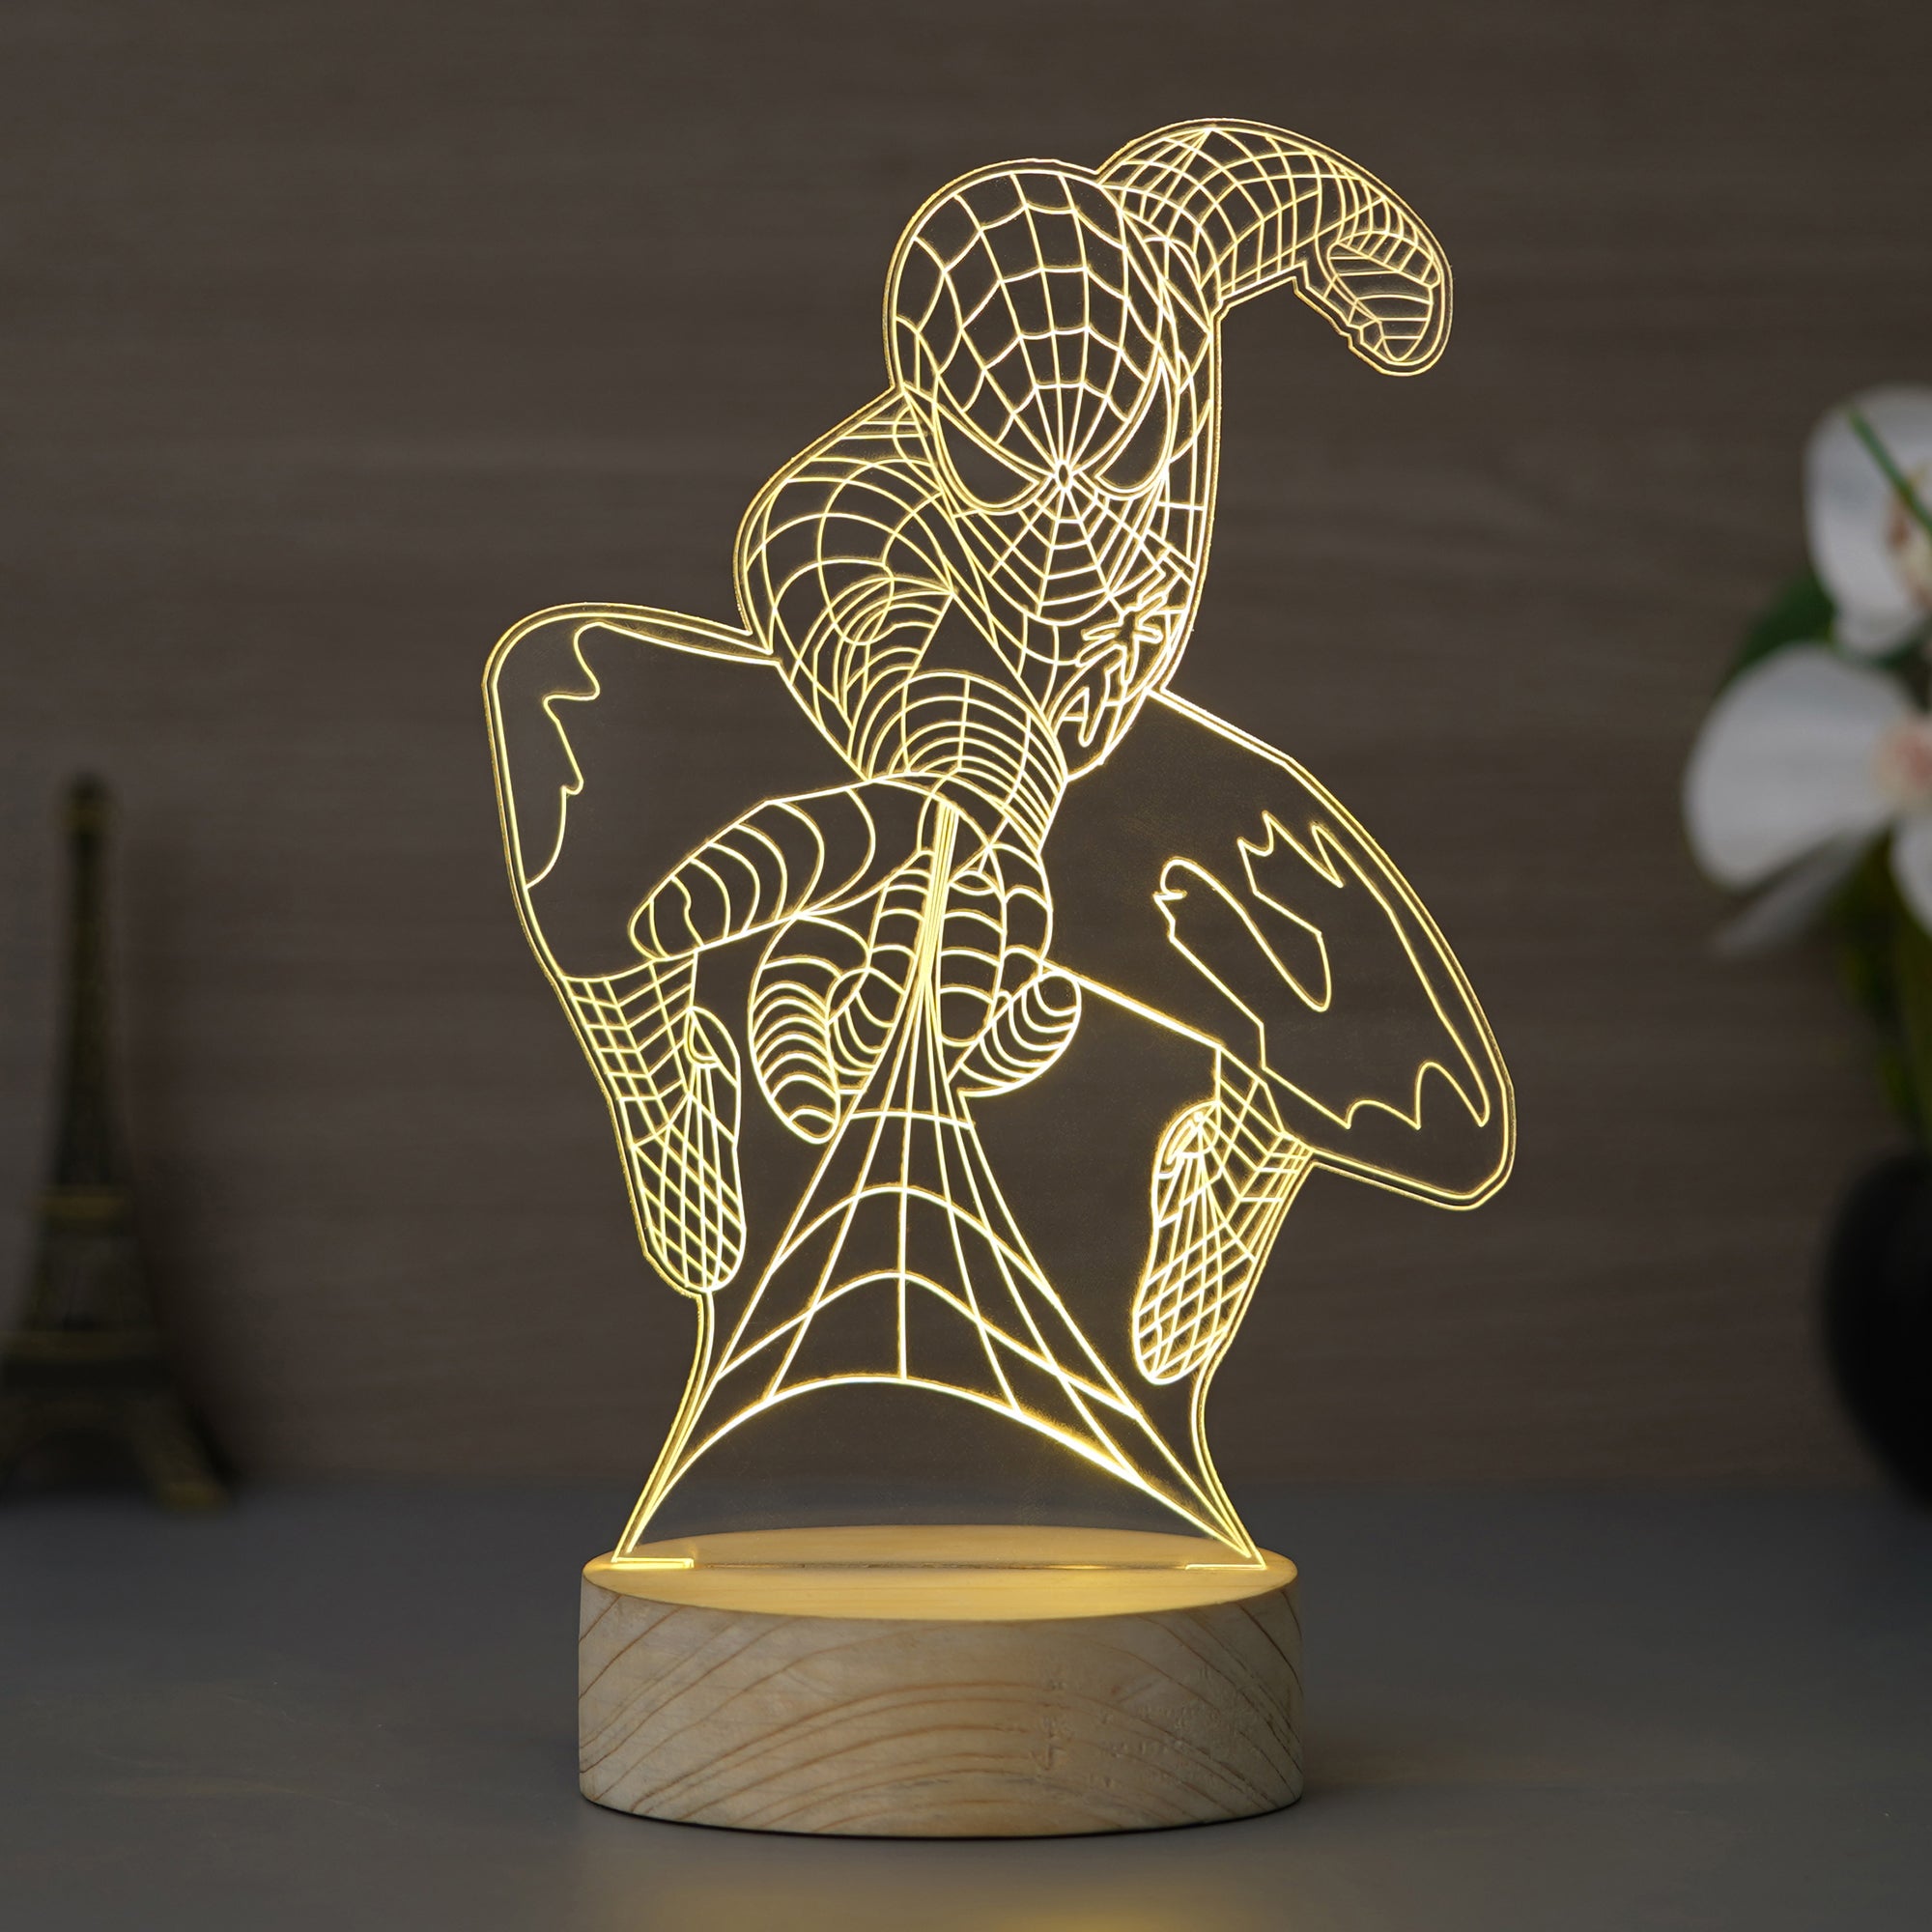 Spiderman Design Carved on Acrylic & Wood Base Night Lamp